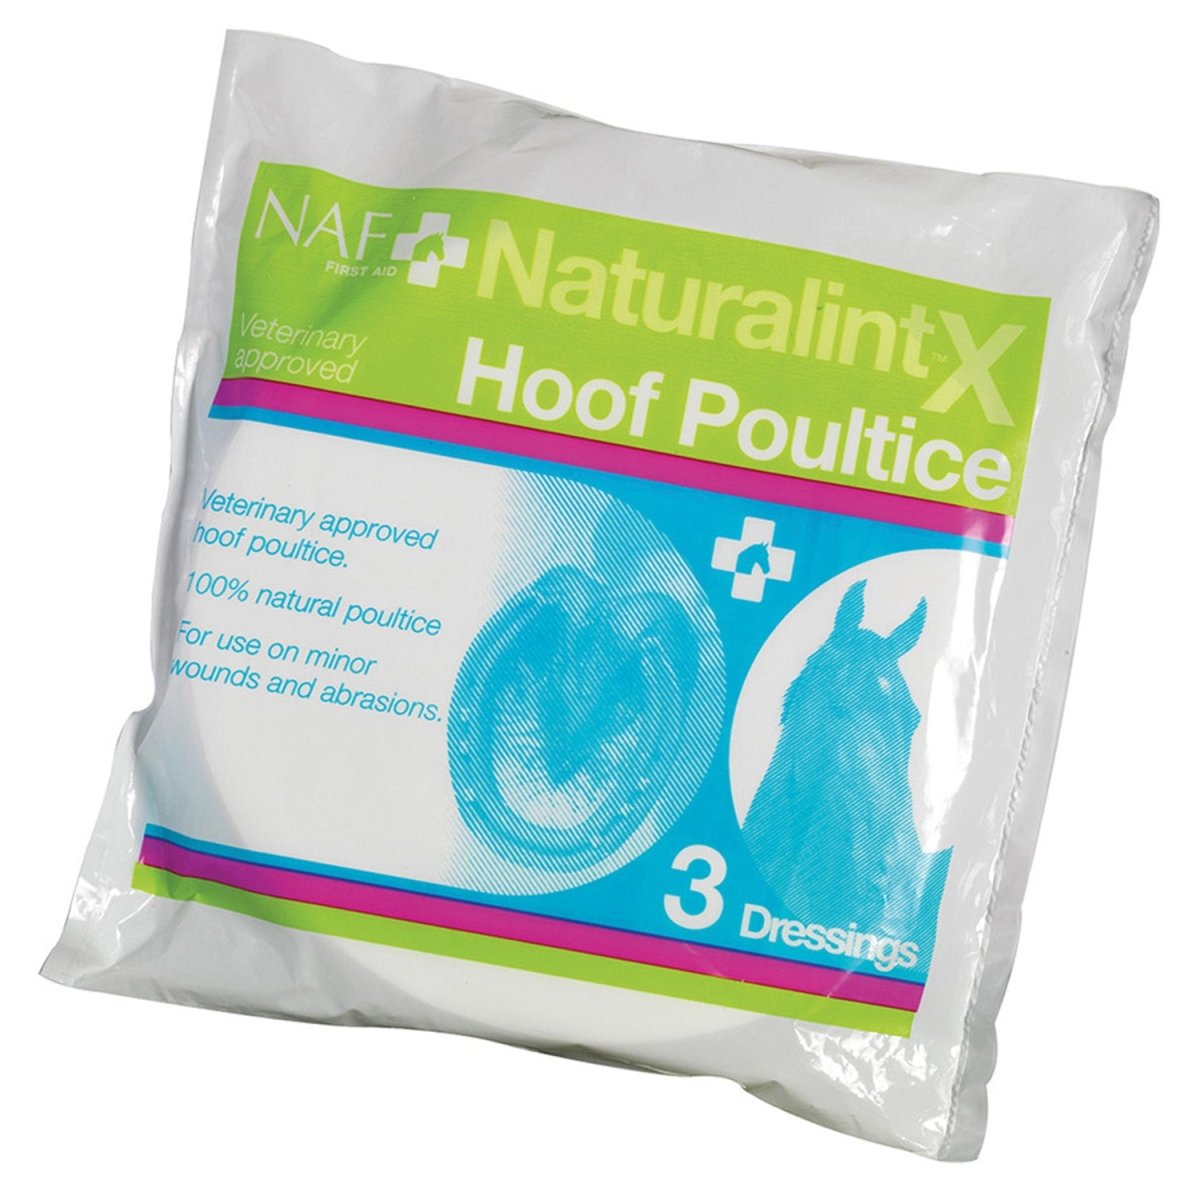 Naf Naturalintx Hoof Poultice - 3Pack -